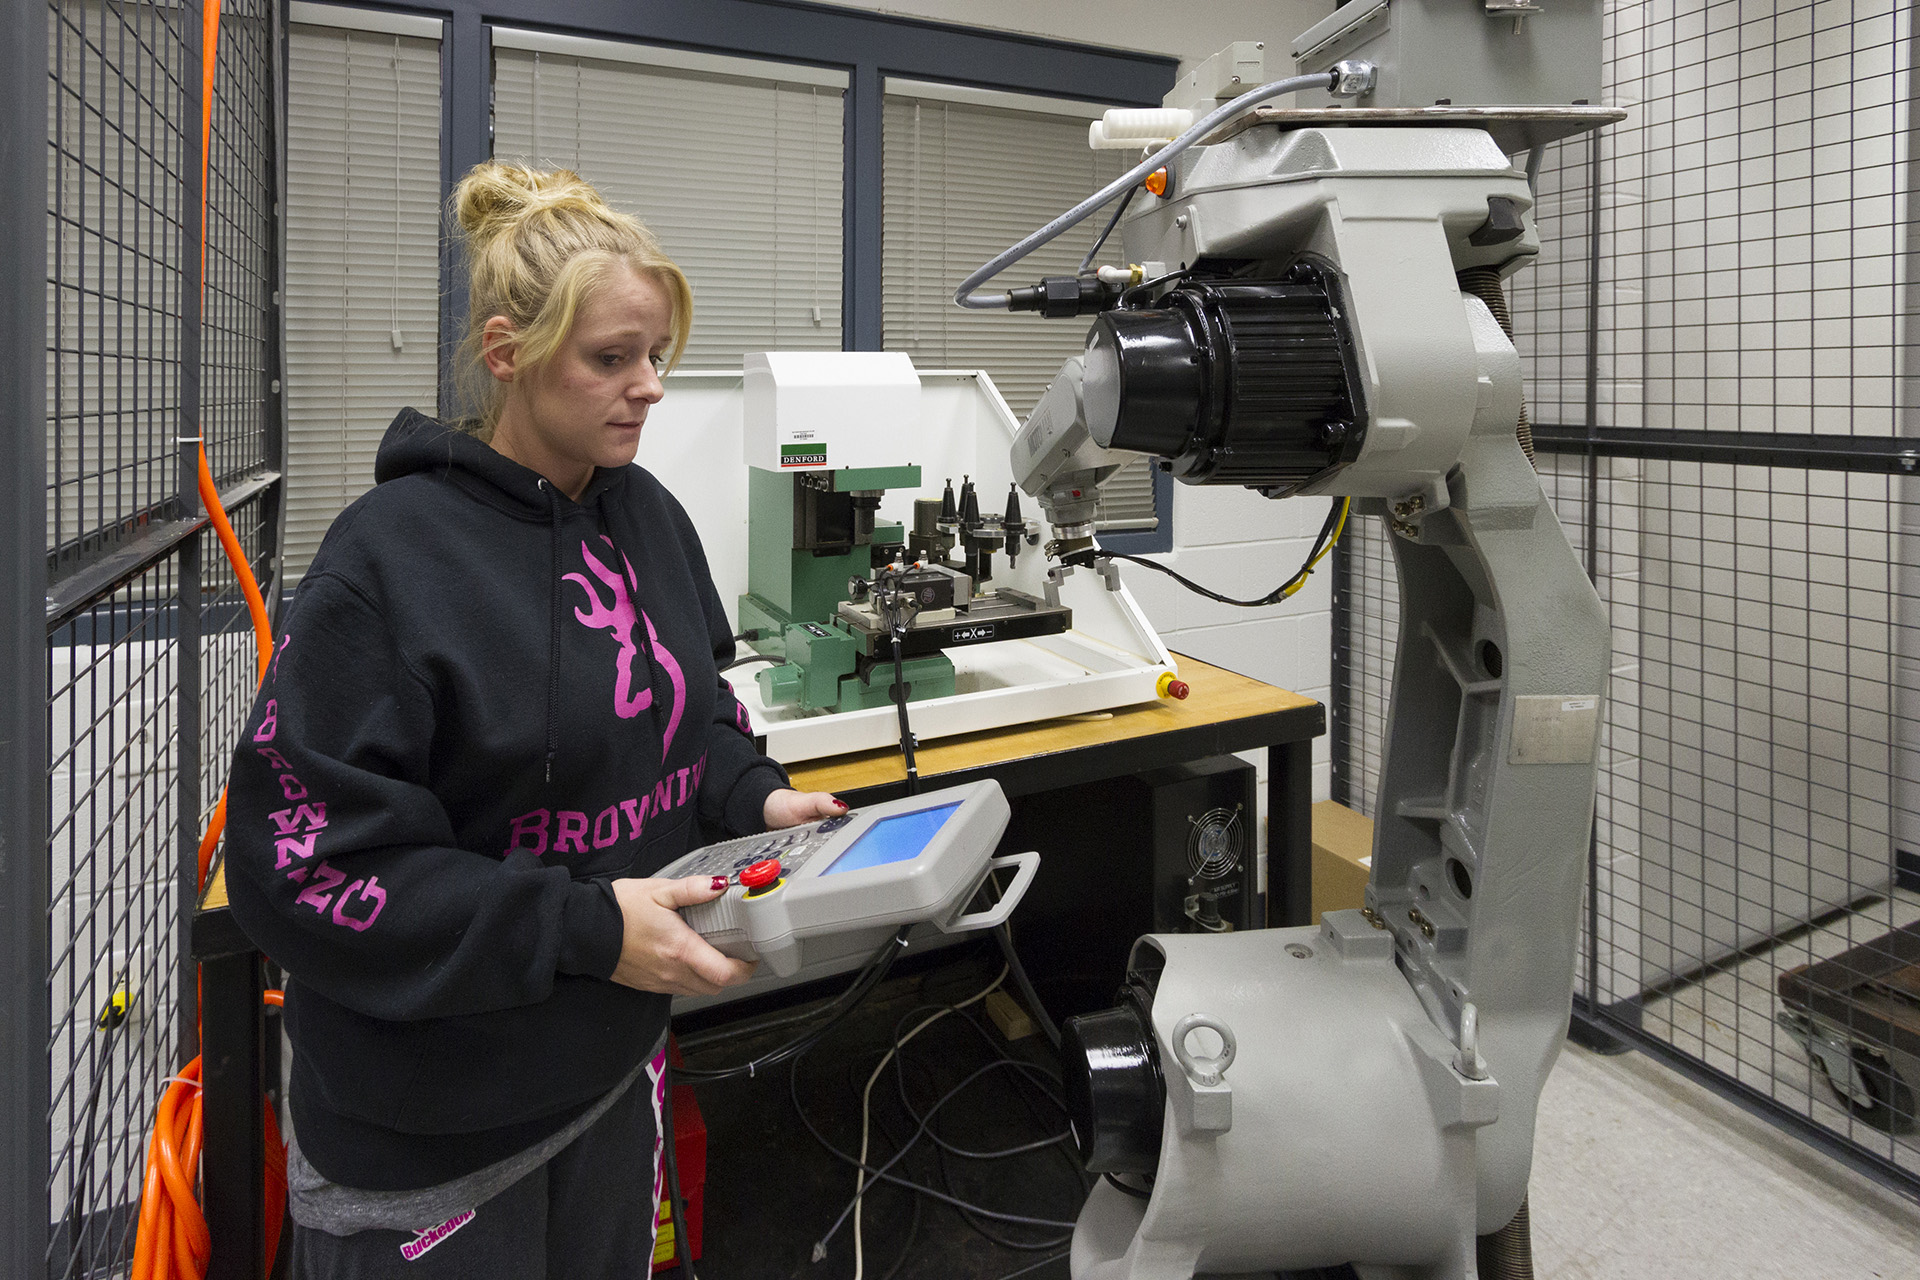 A student operating a robotic arm